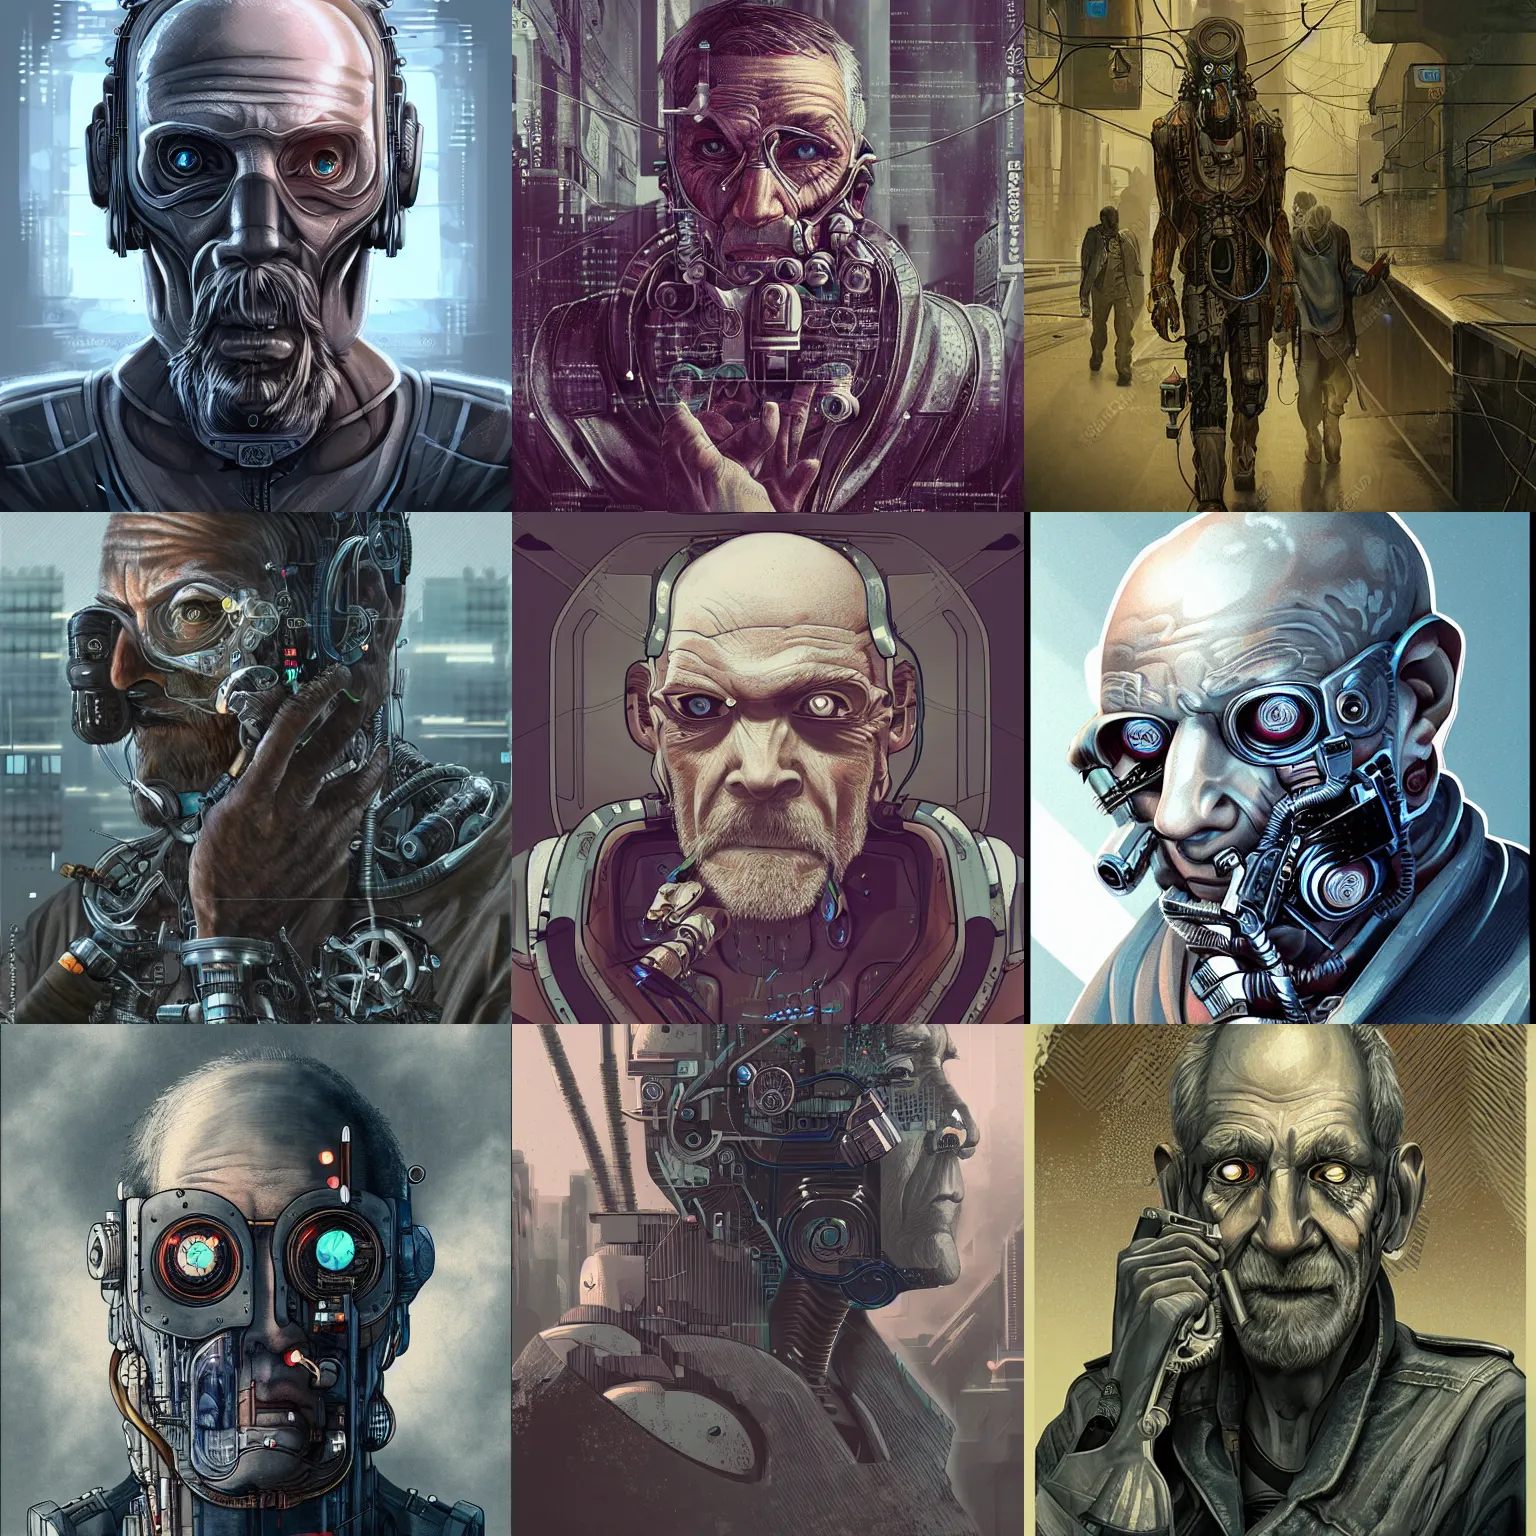 Prompt: Ultra realistic illustration of an old man cyborg cyberpunk sci-fi fantasy dystopian art nouveau graphic design